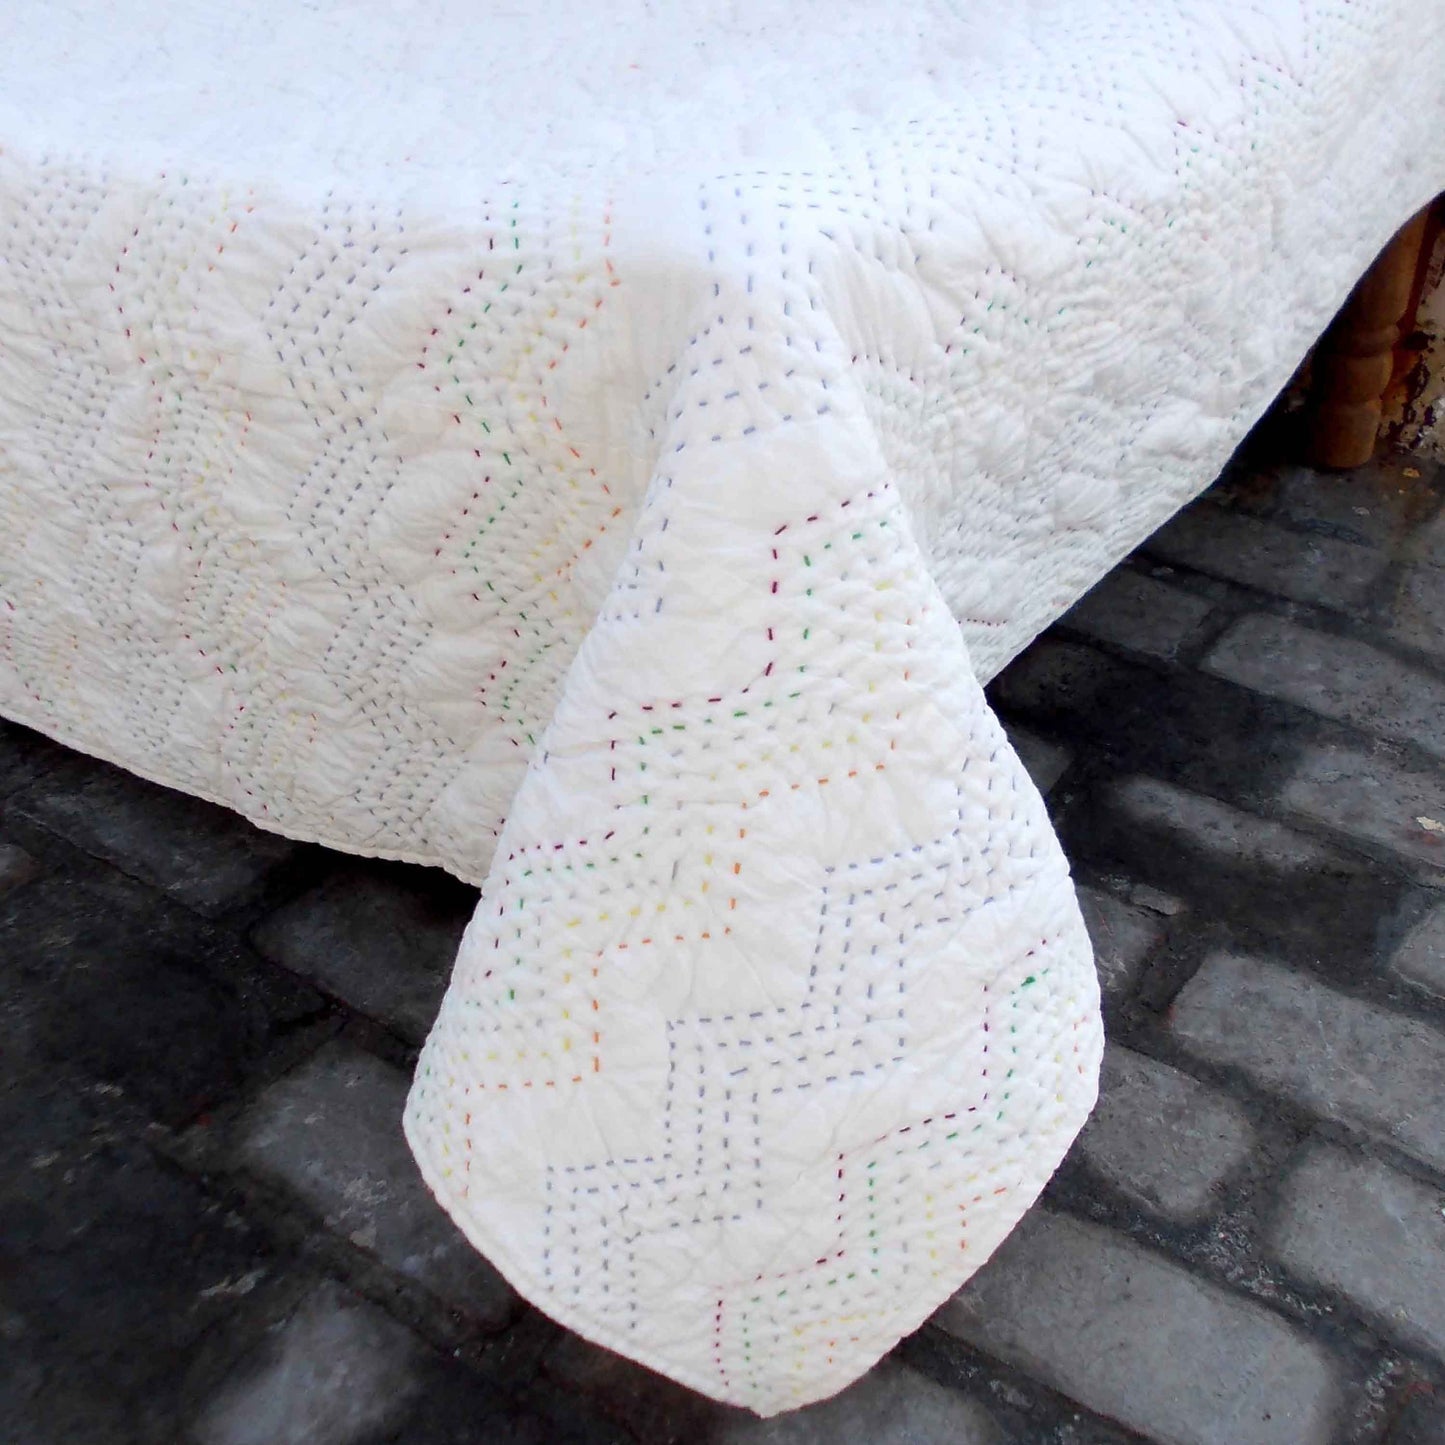 WHITE Kantha quilt - chevron pattern quilting - Quilt set / Quilt / Pillow case available